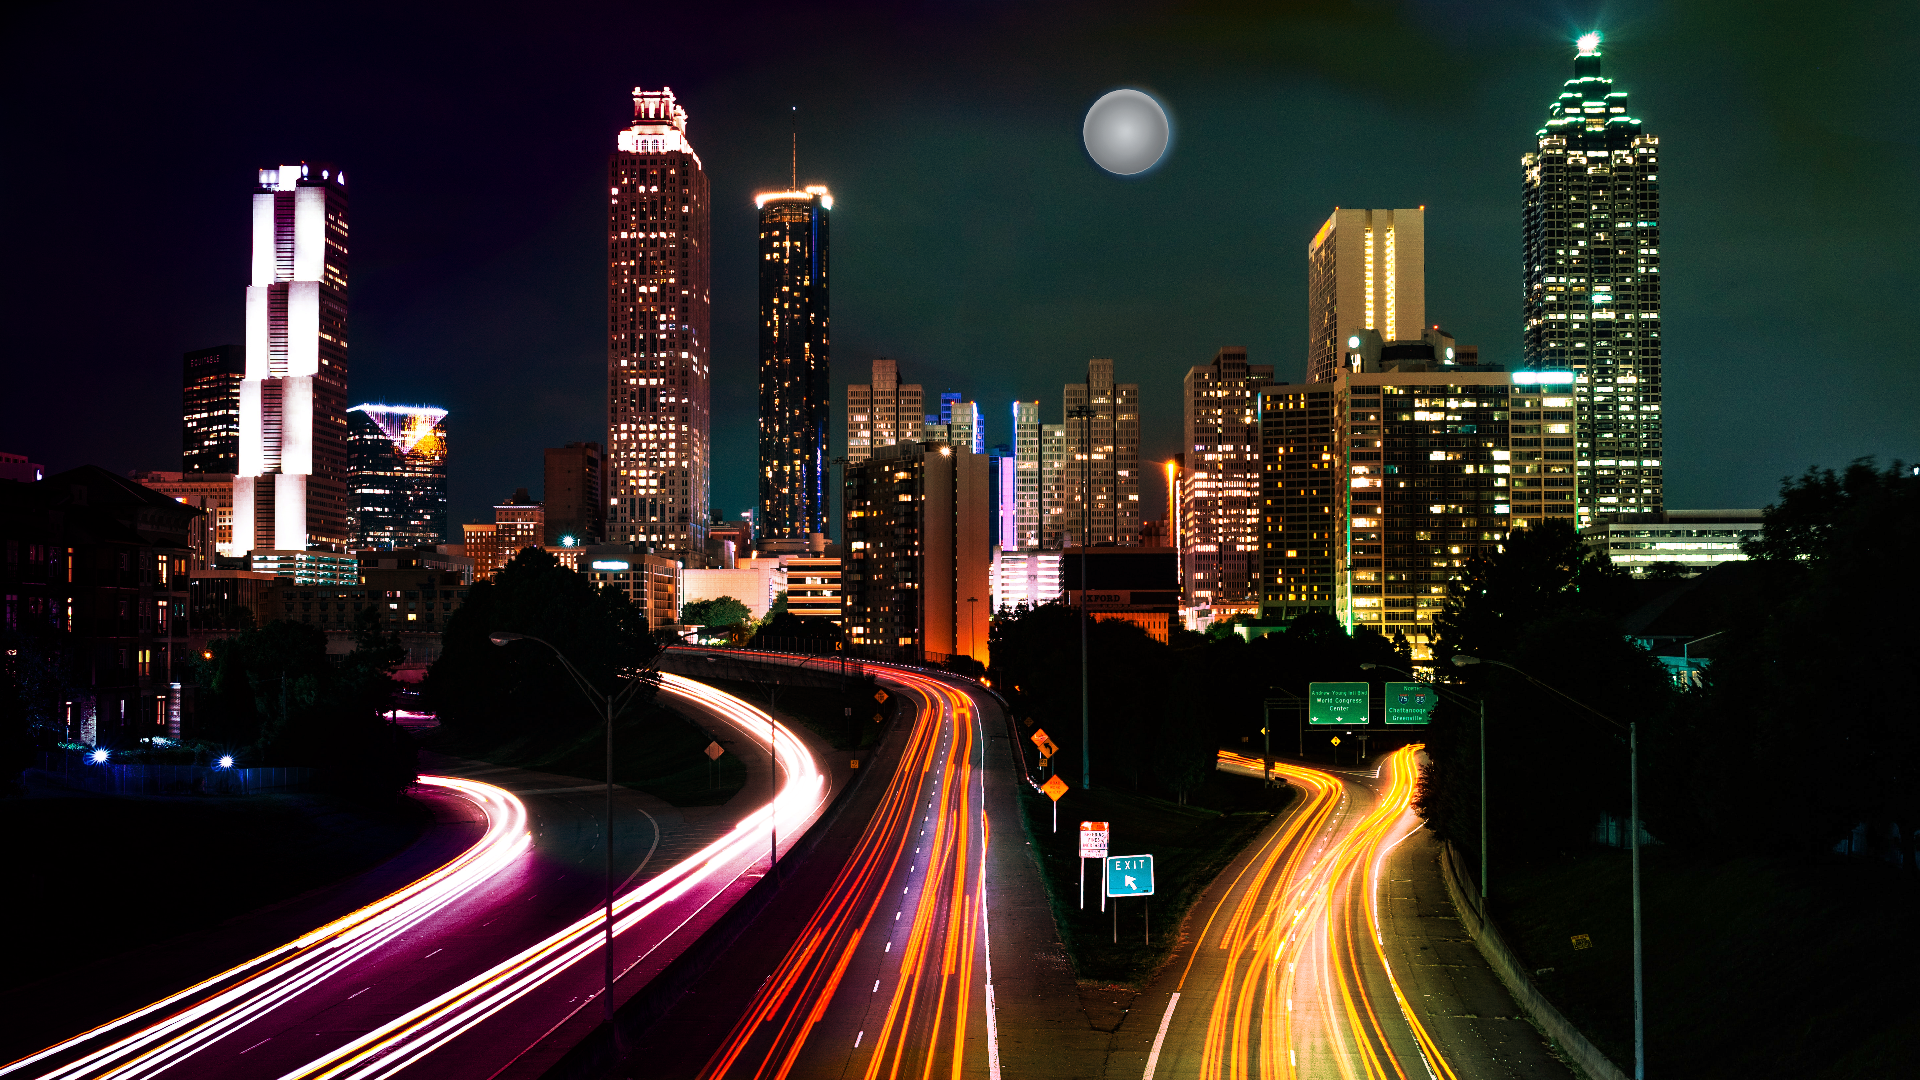 city lights 2 - креирао Henri Huotari са paint